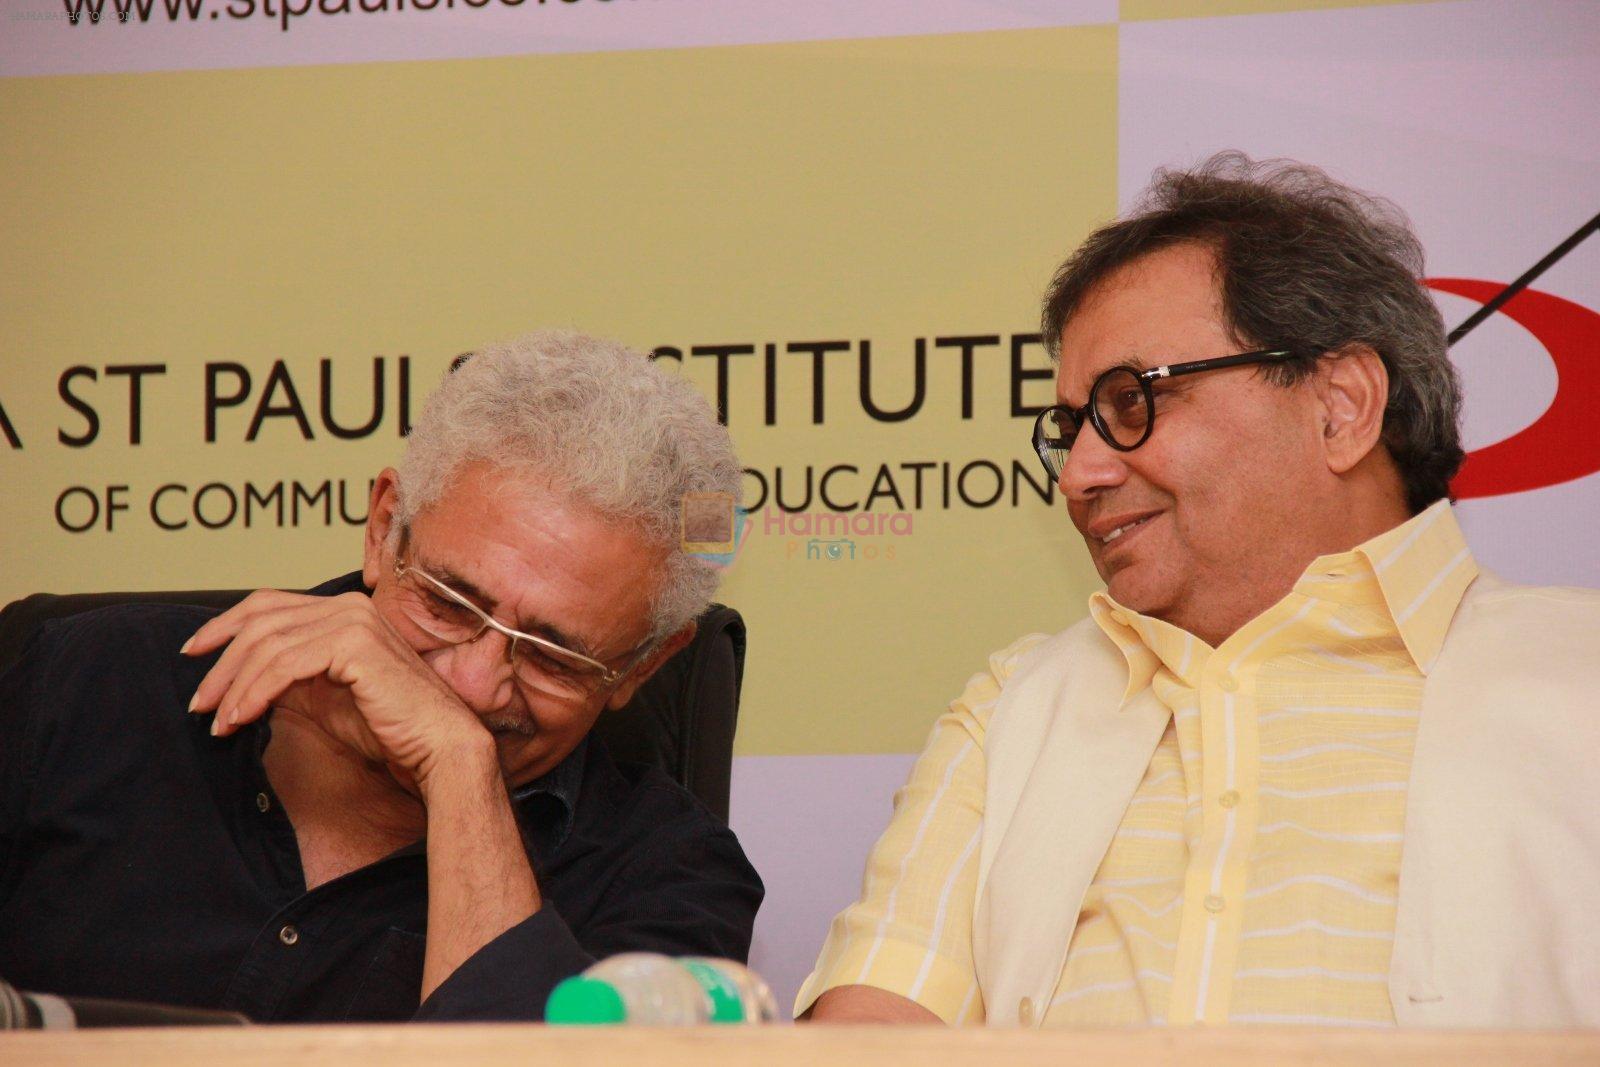 Subhash Ghai, Naseeruddin Shah at Stpaulsice.com launch_ in Mumbai on 12th Feb 2015